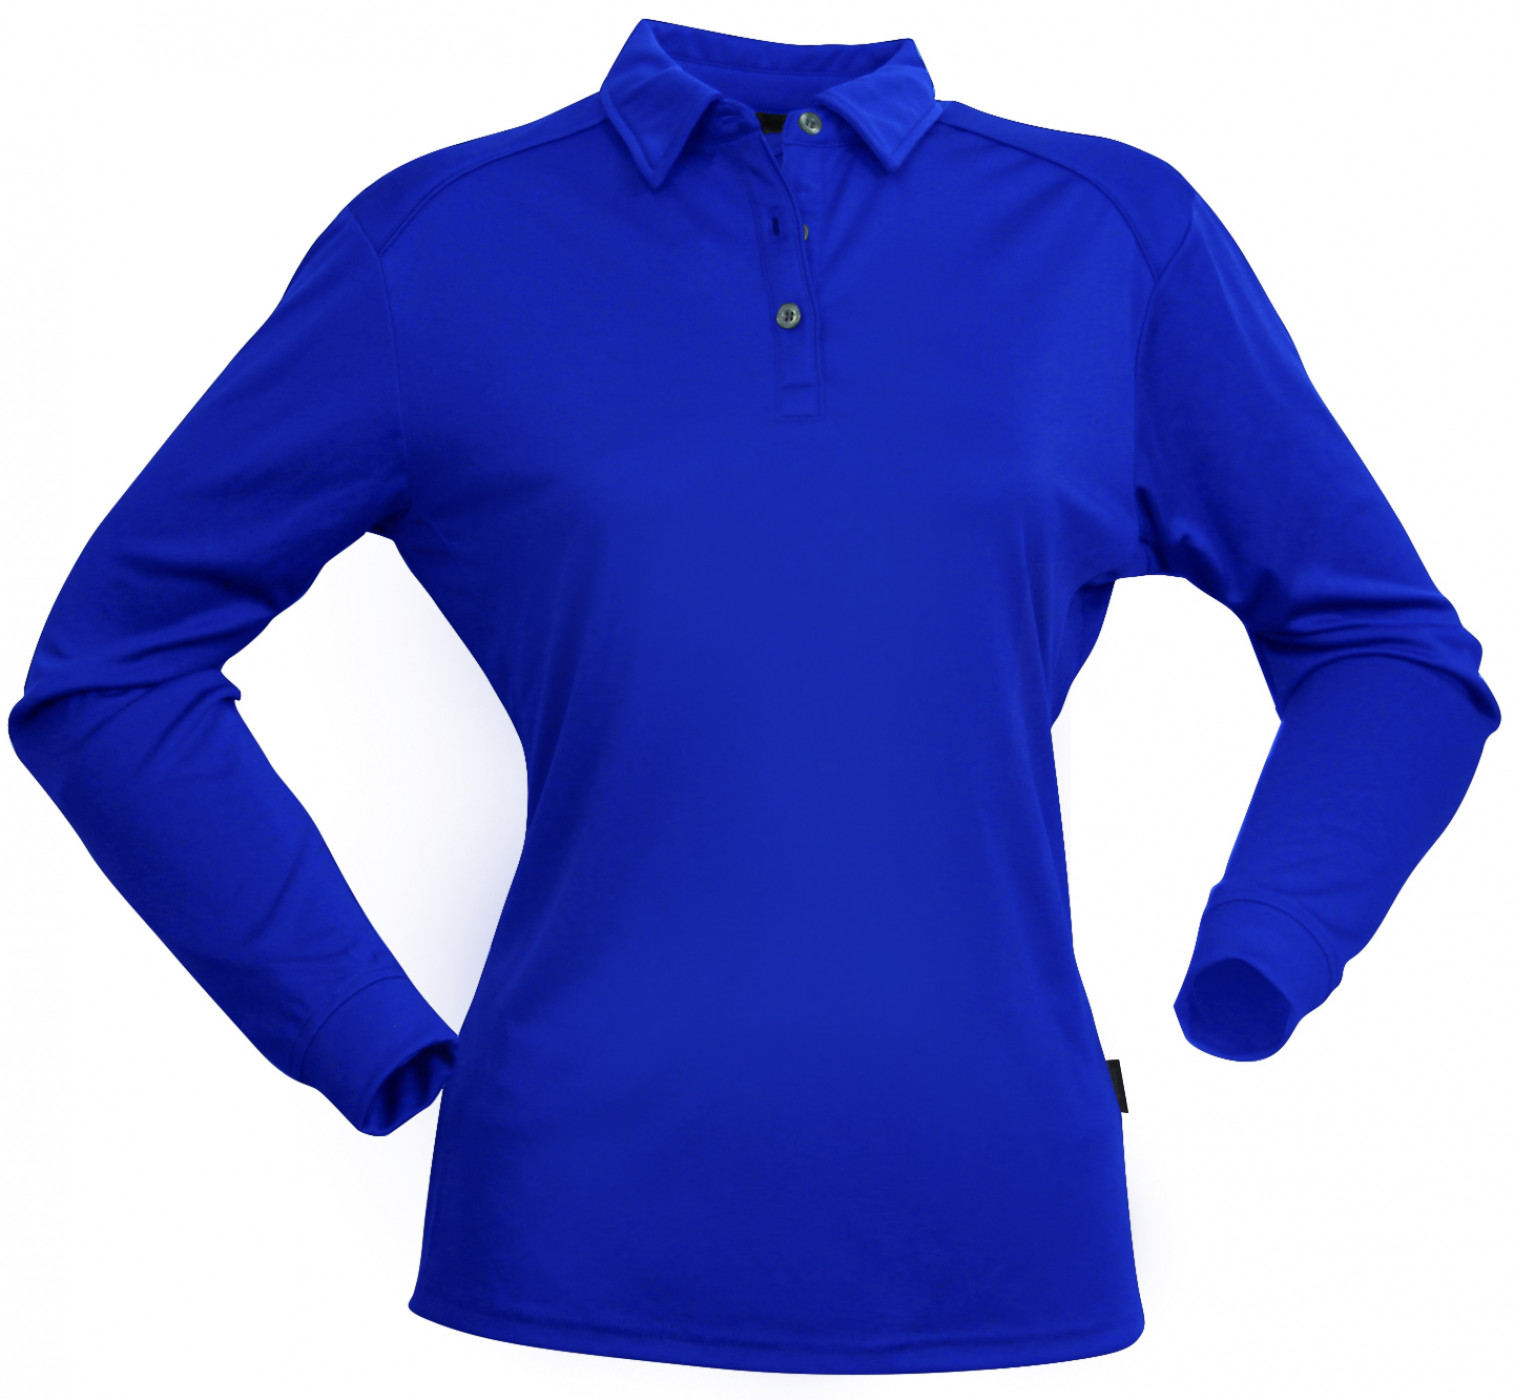 Womens Long Sleeve Freshen Polo Shirts - Black | The Uniform Edit